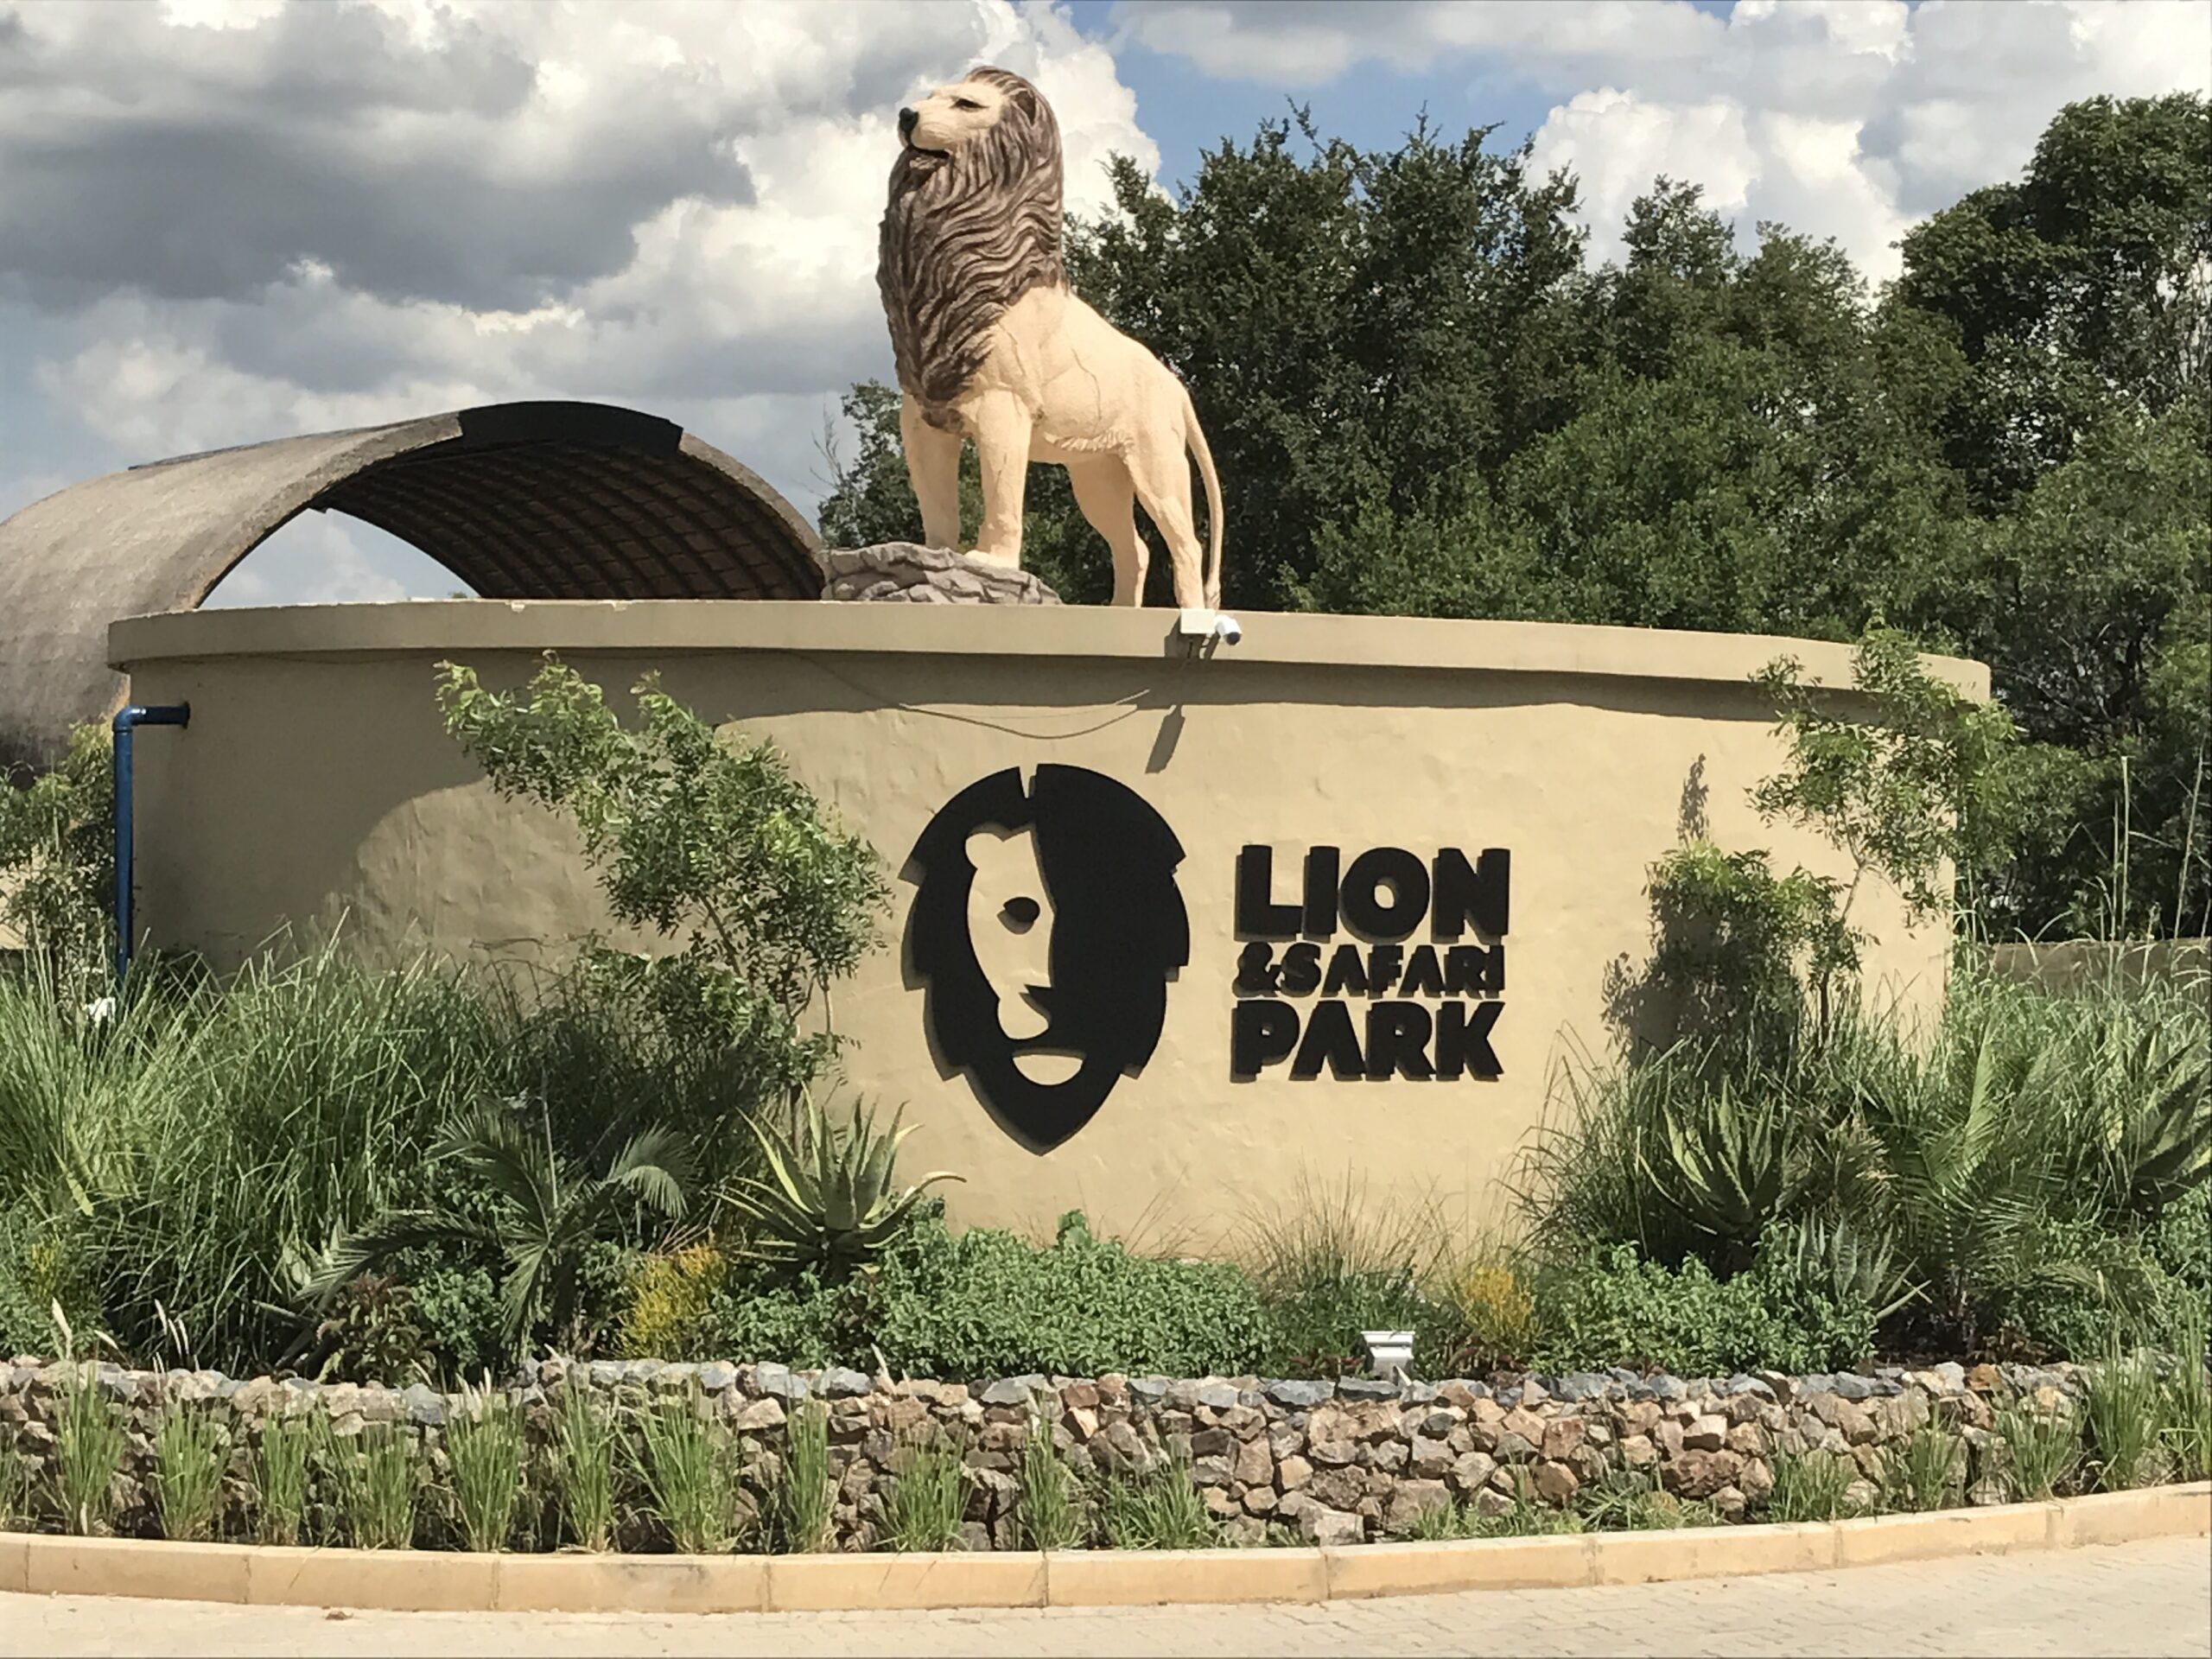 african lion safari johannesburg